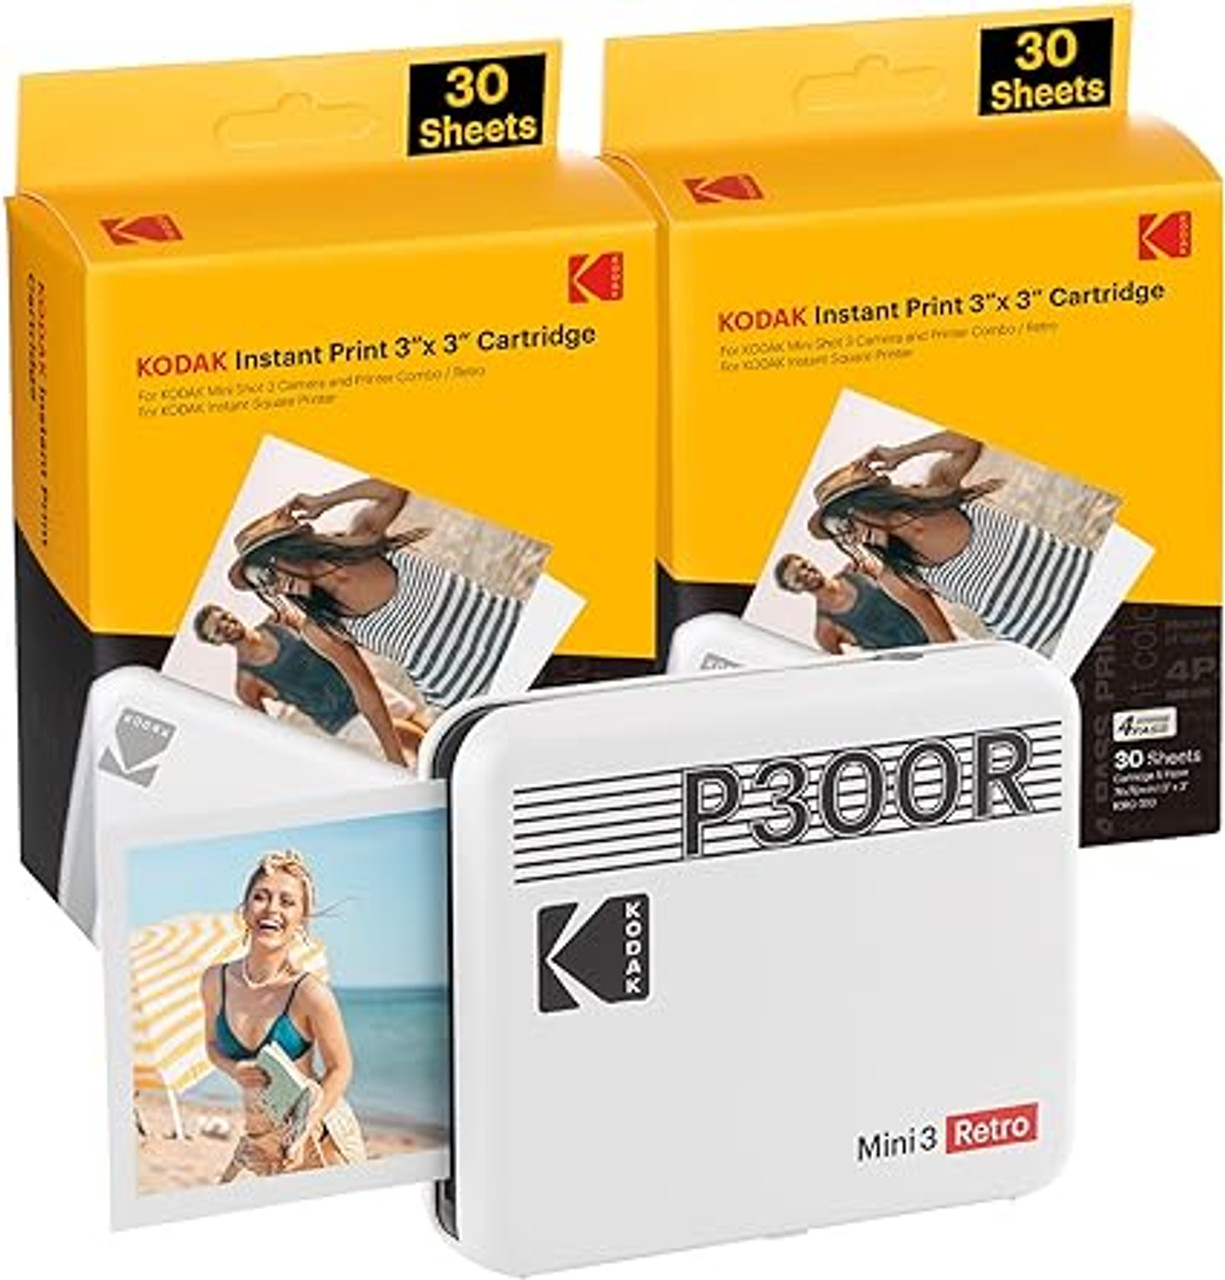 KODAK Mini 3 Retro P300R 4PASS Portable Photo Printer (3x3 inches)  Bluetooth + 68 Sheets, White